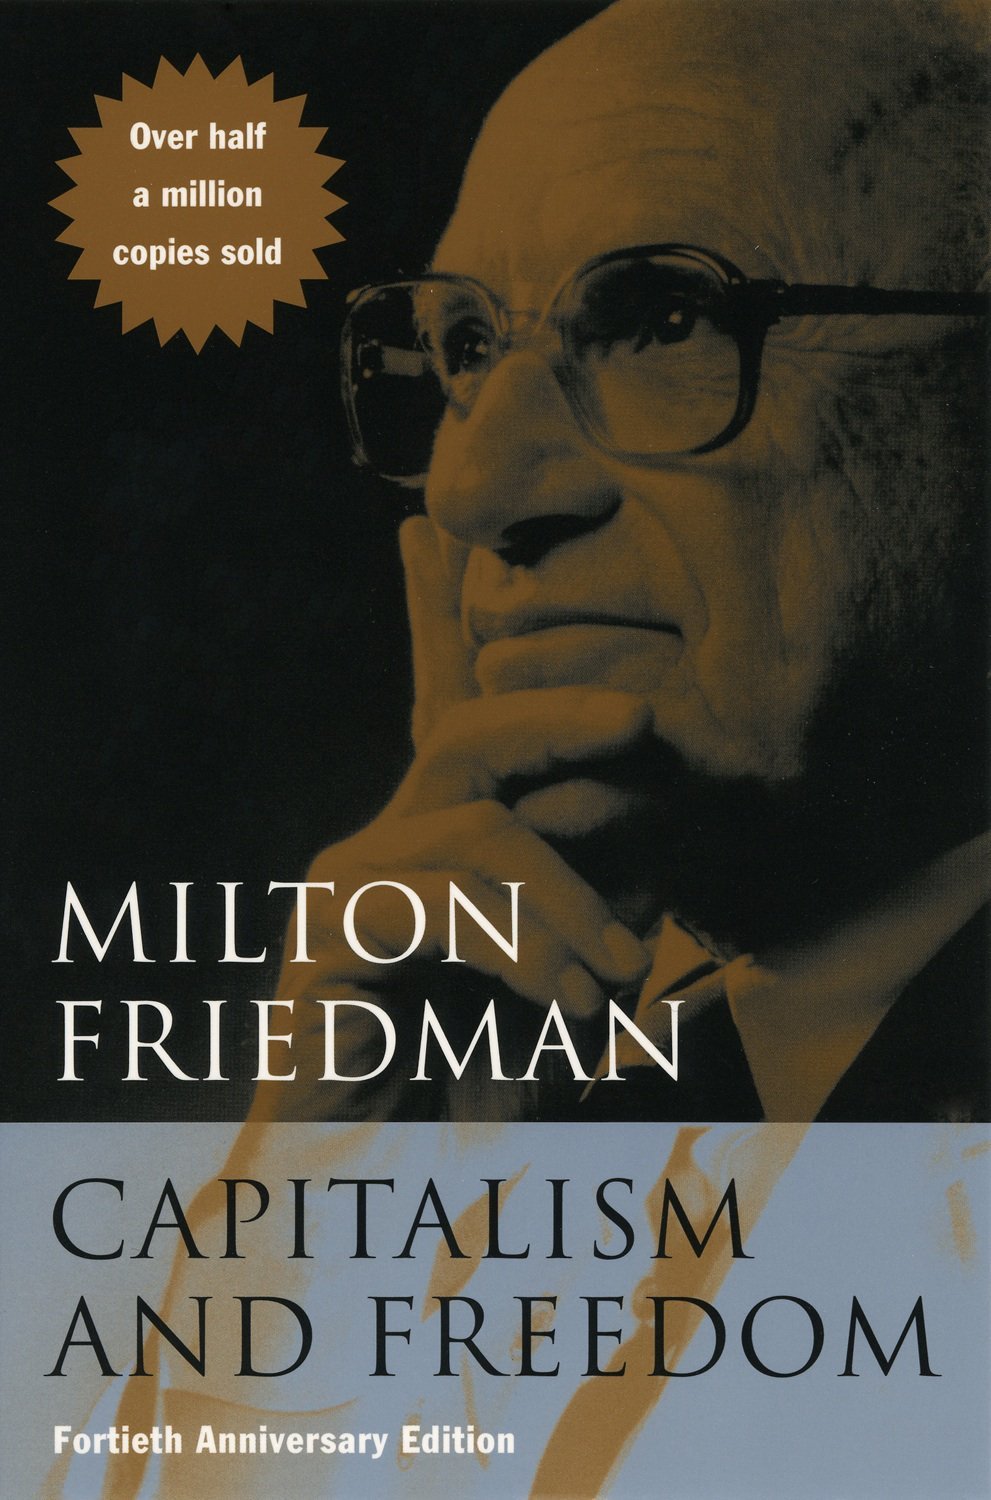 Milton Friedman (1912-2006).